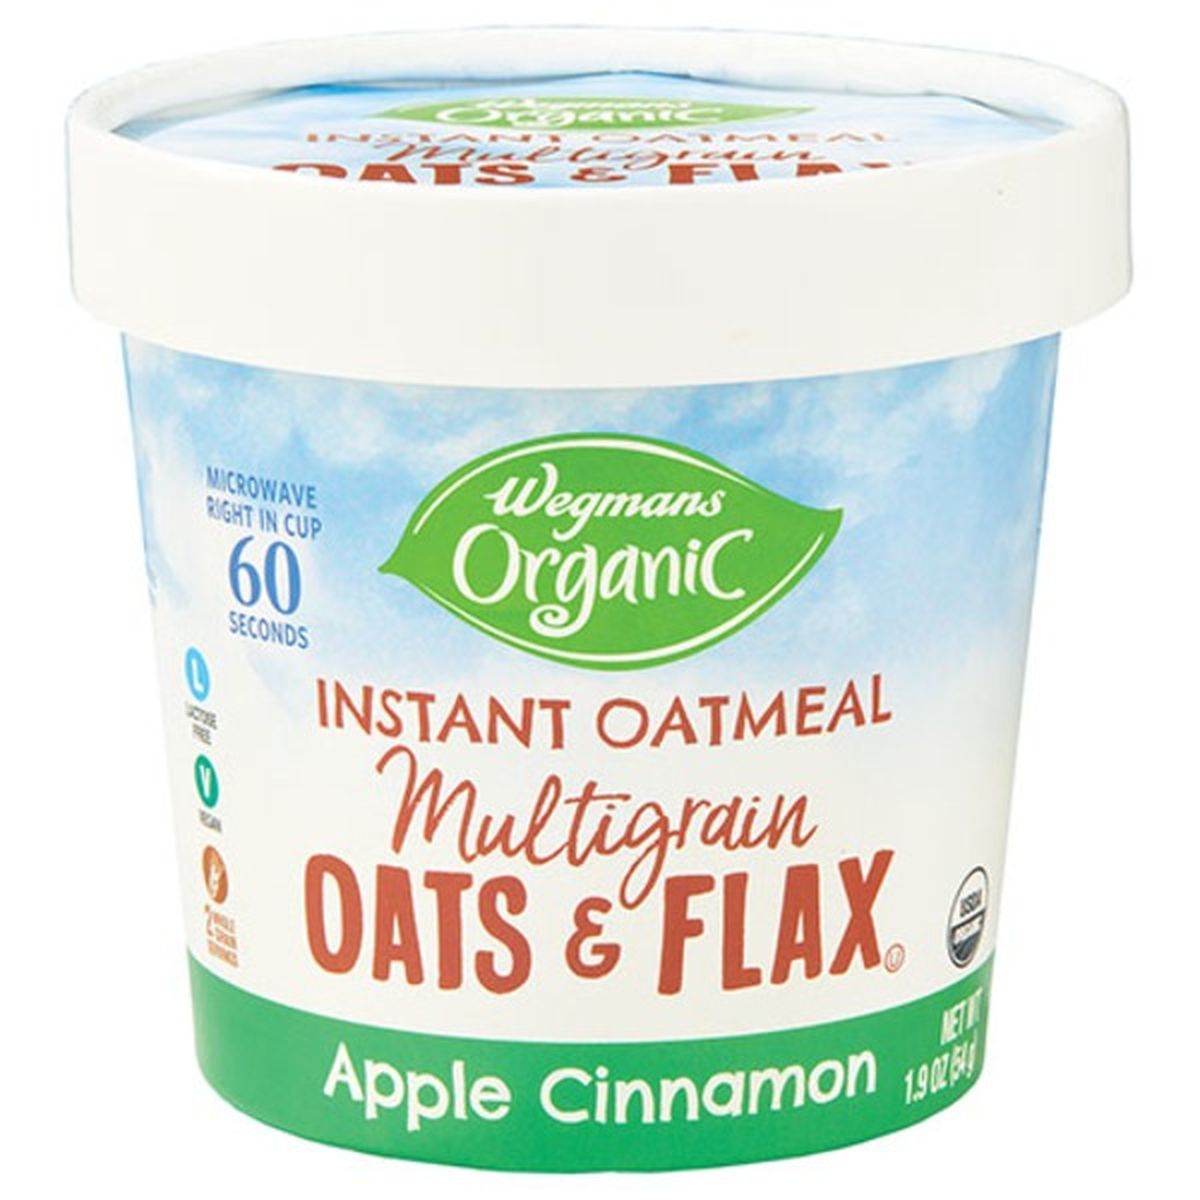 Calories in Wegmans Organic Apple Cinnamon Oats & Flax Instant Oatmeal